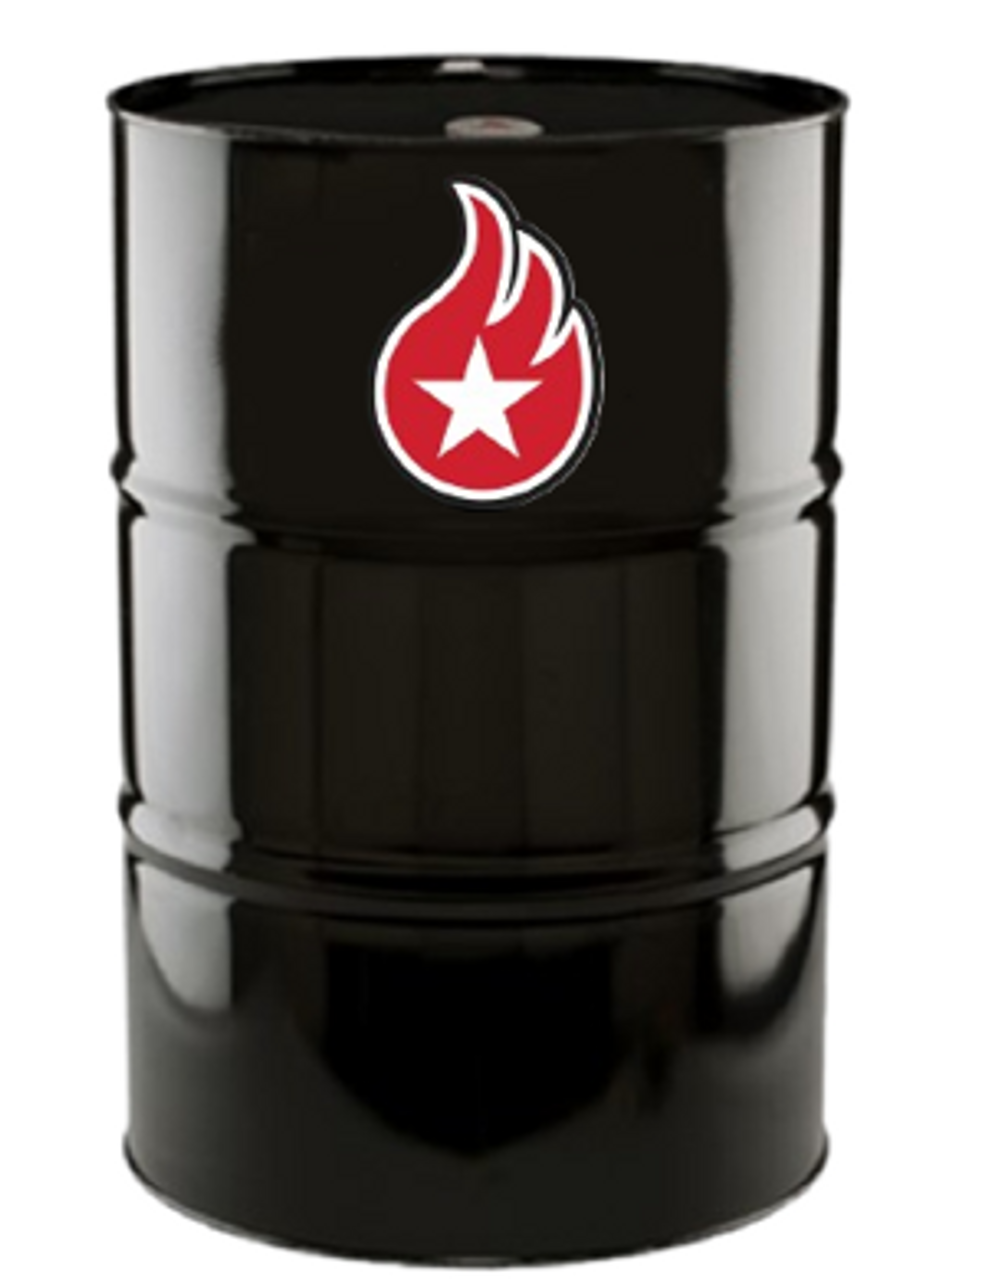 Starfire AW 100 Hydraulic Oil -55 Gallon Drum